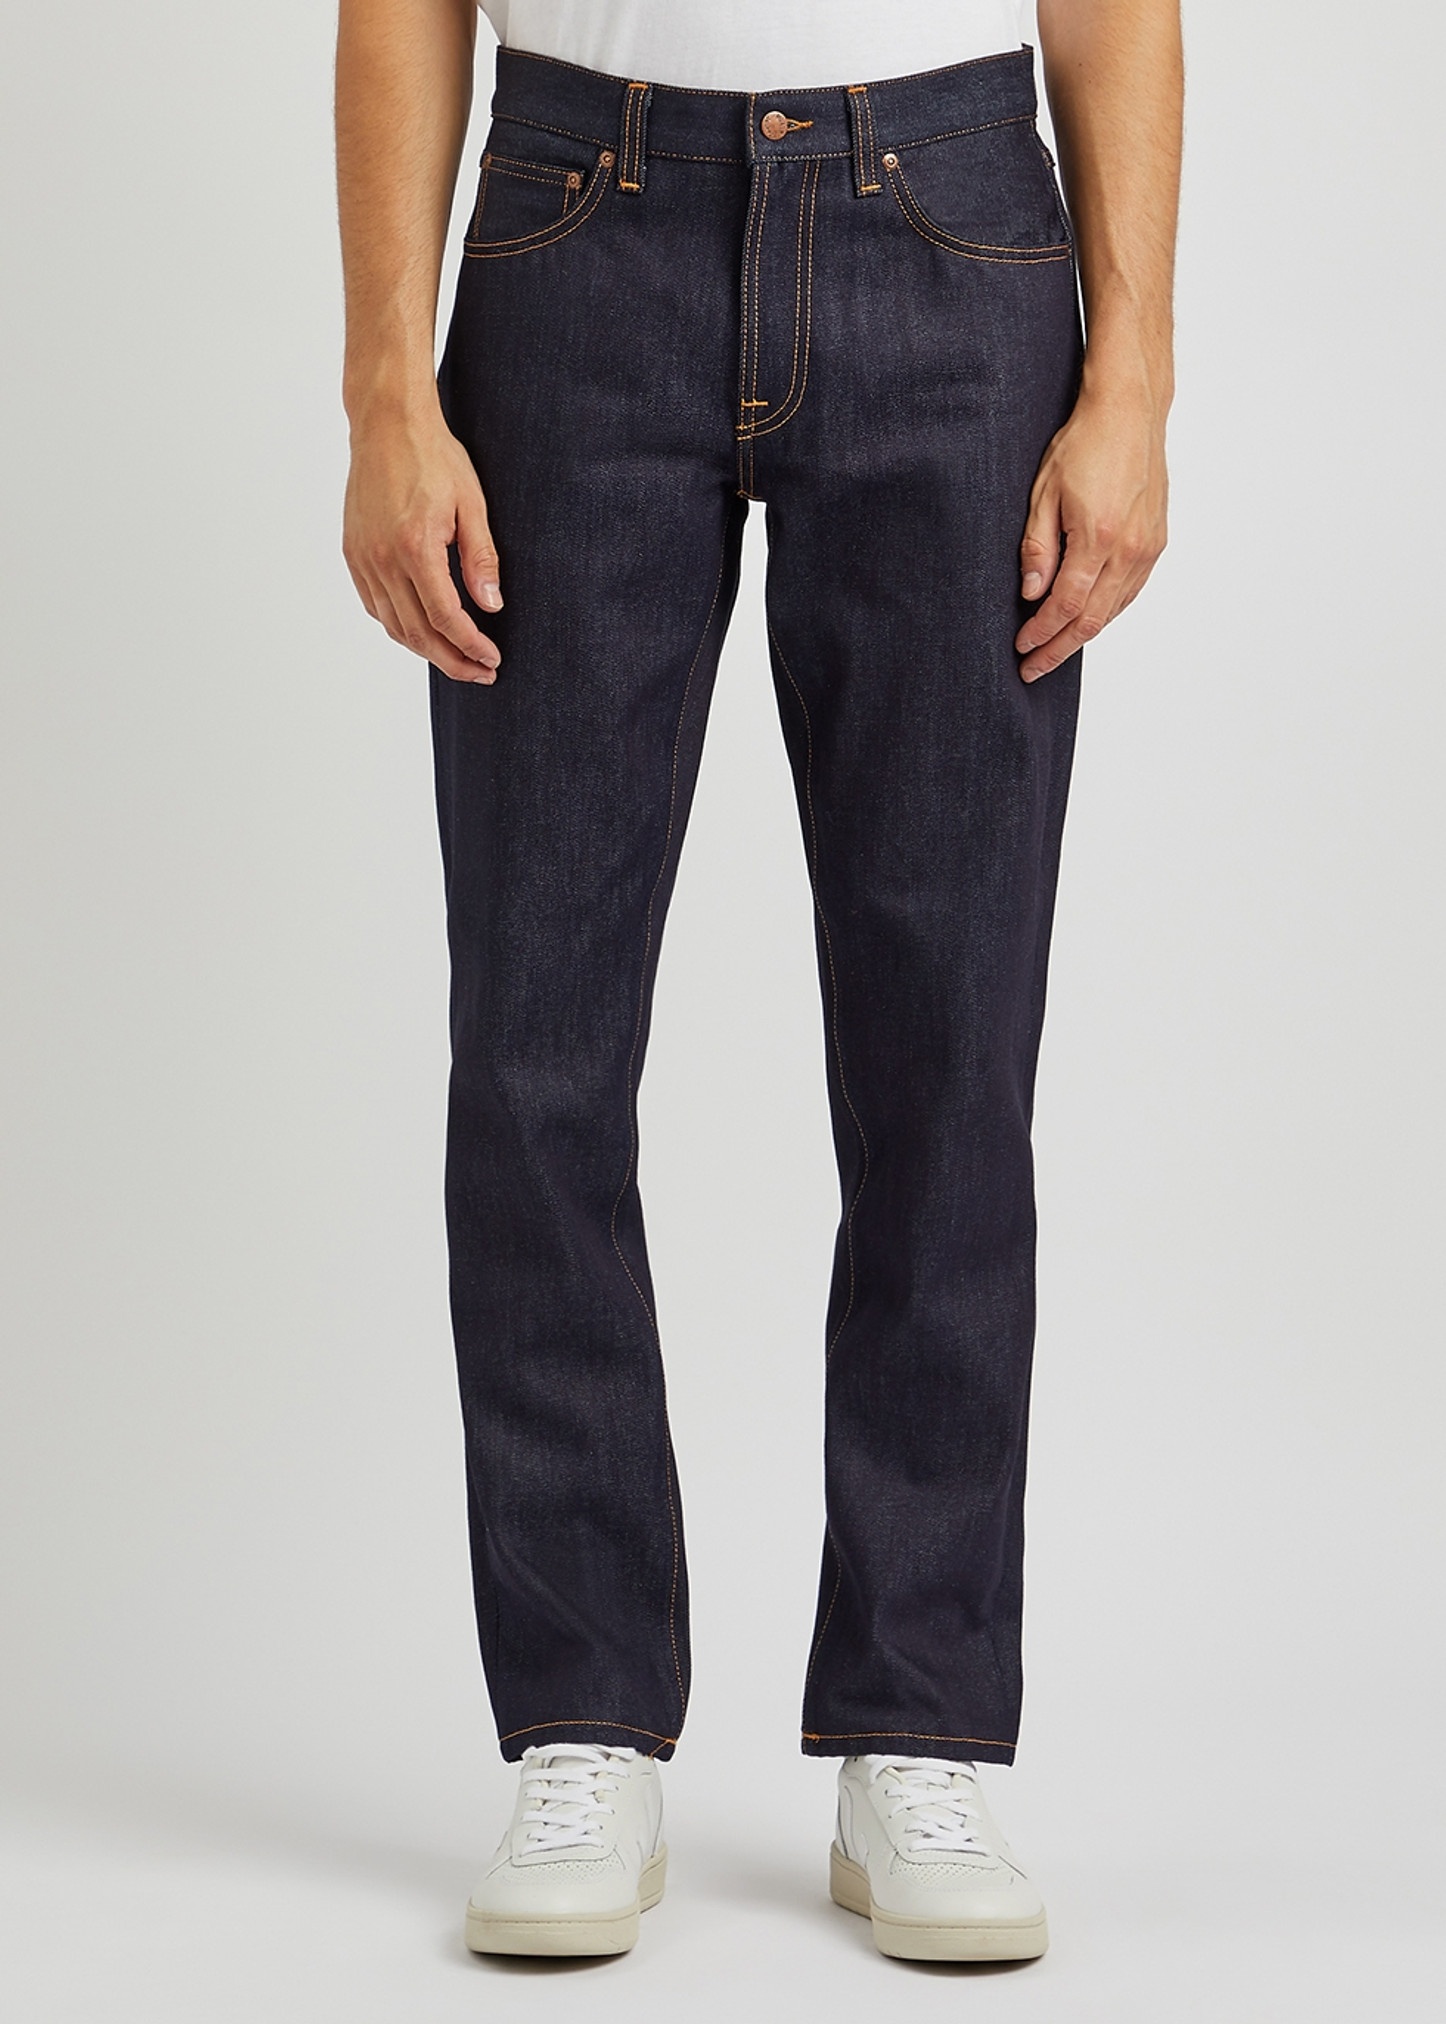 Gritty Jackson navy straight-leg jeans - 2